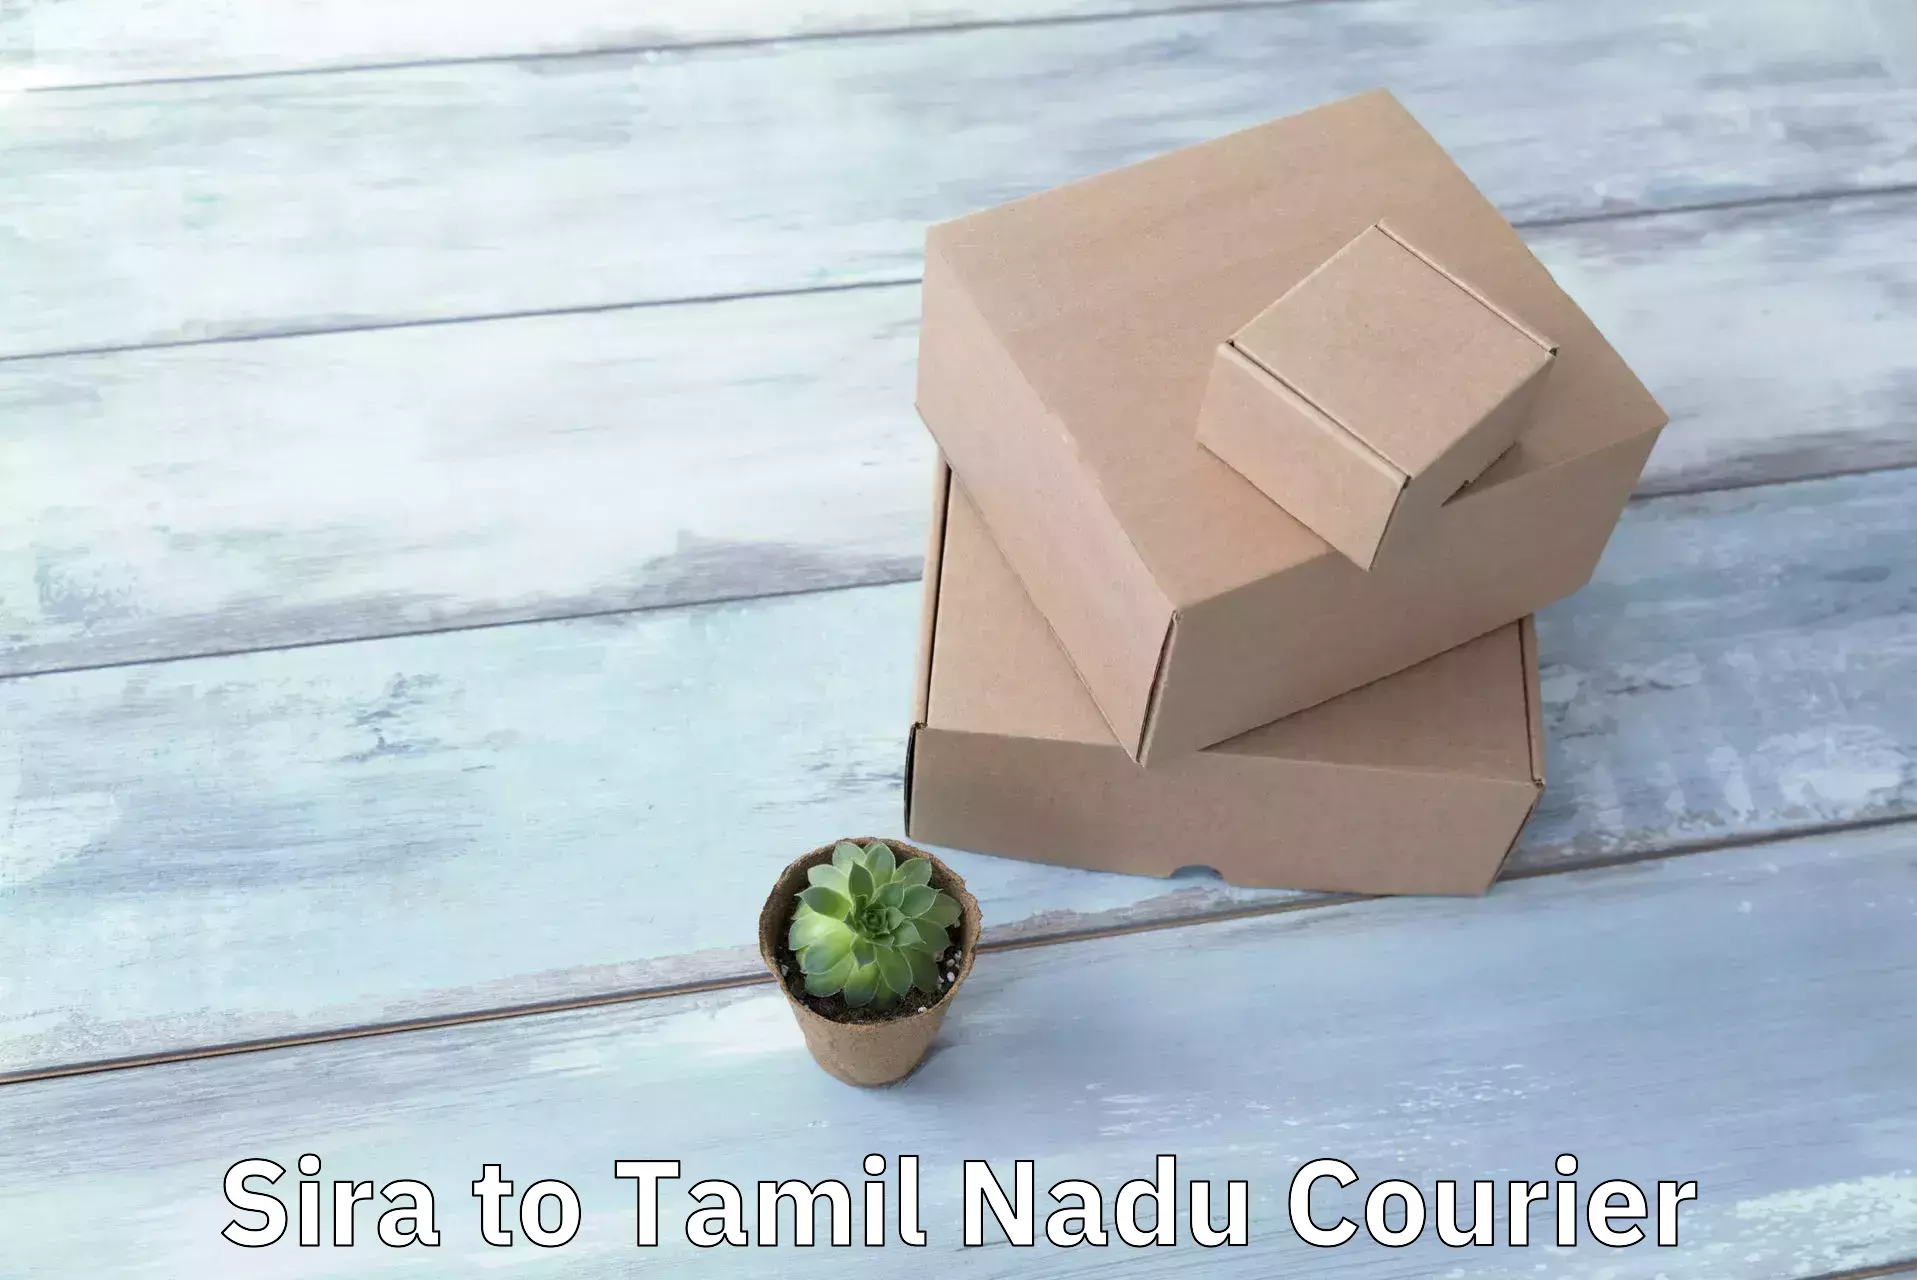 Reliable logistics providers Sira to Tamil Nadu